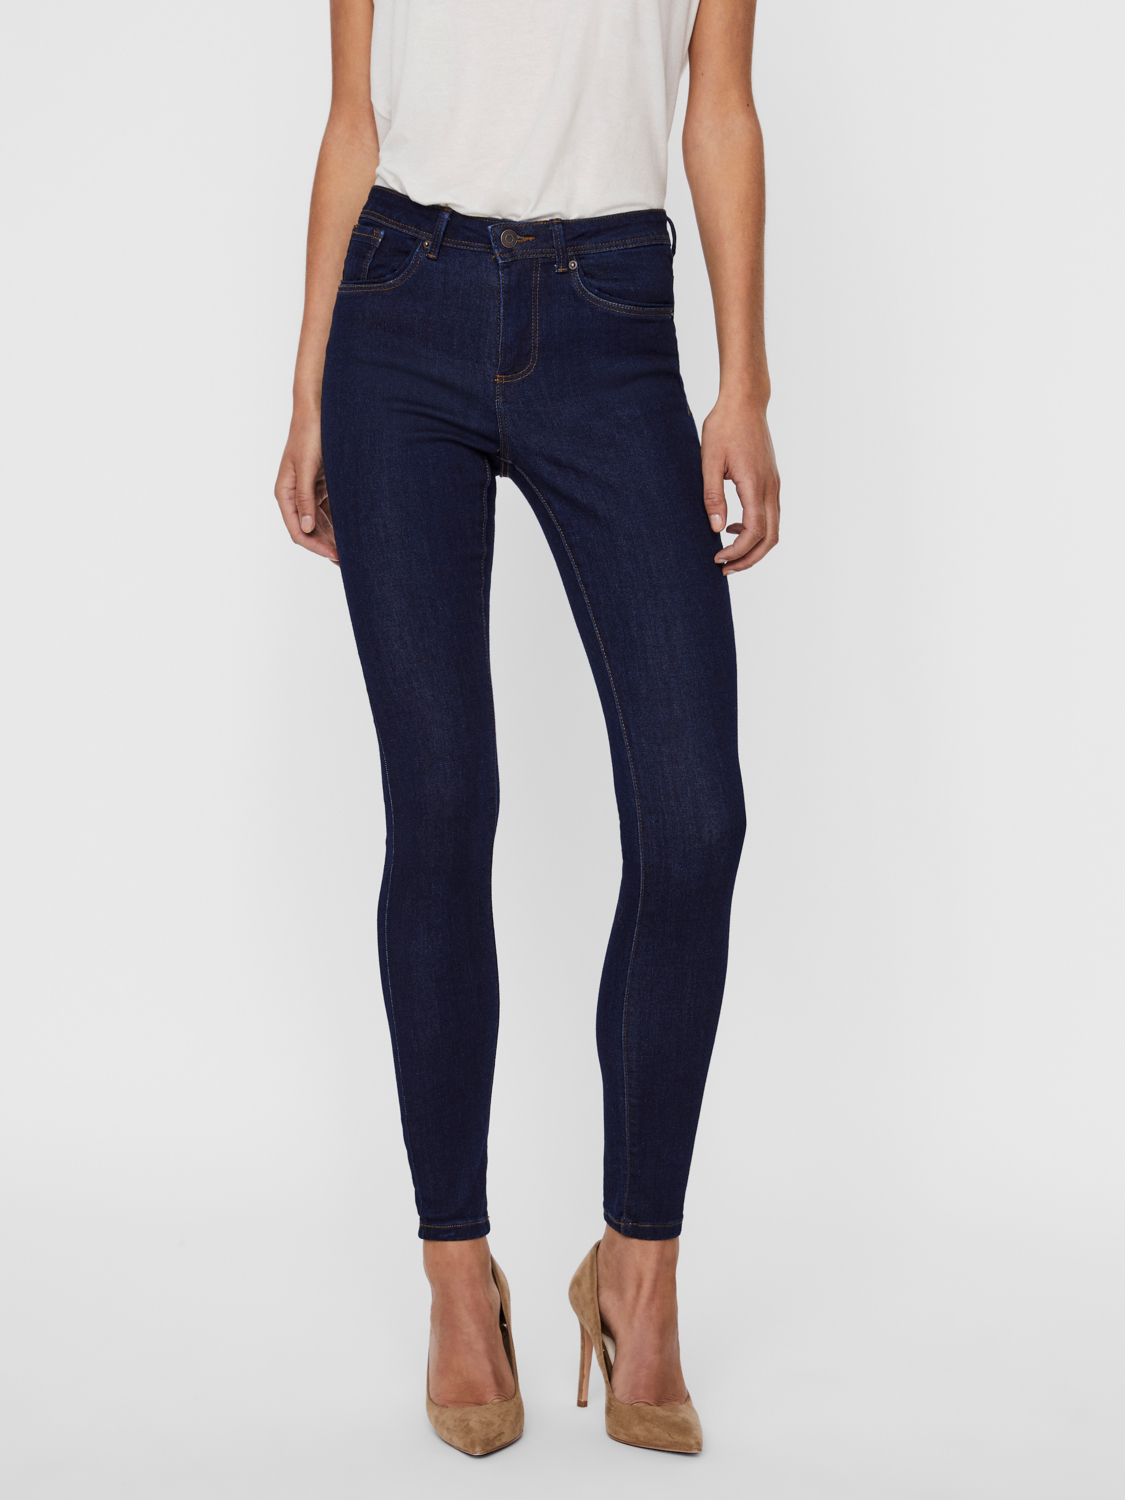 FINAL SALE - Tanya mid waist skinny fit jeans